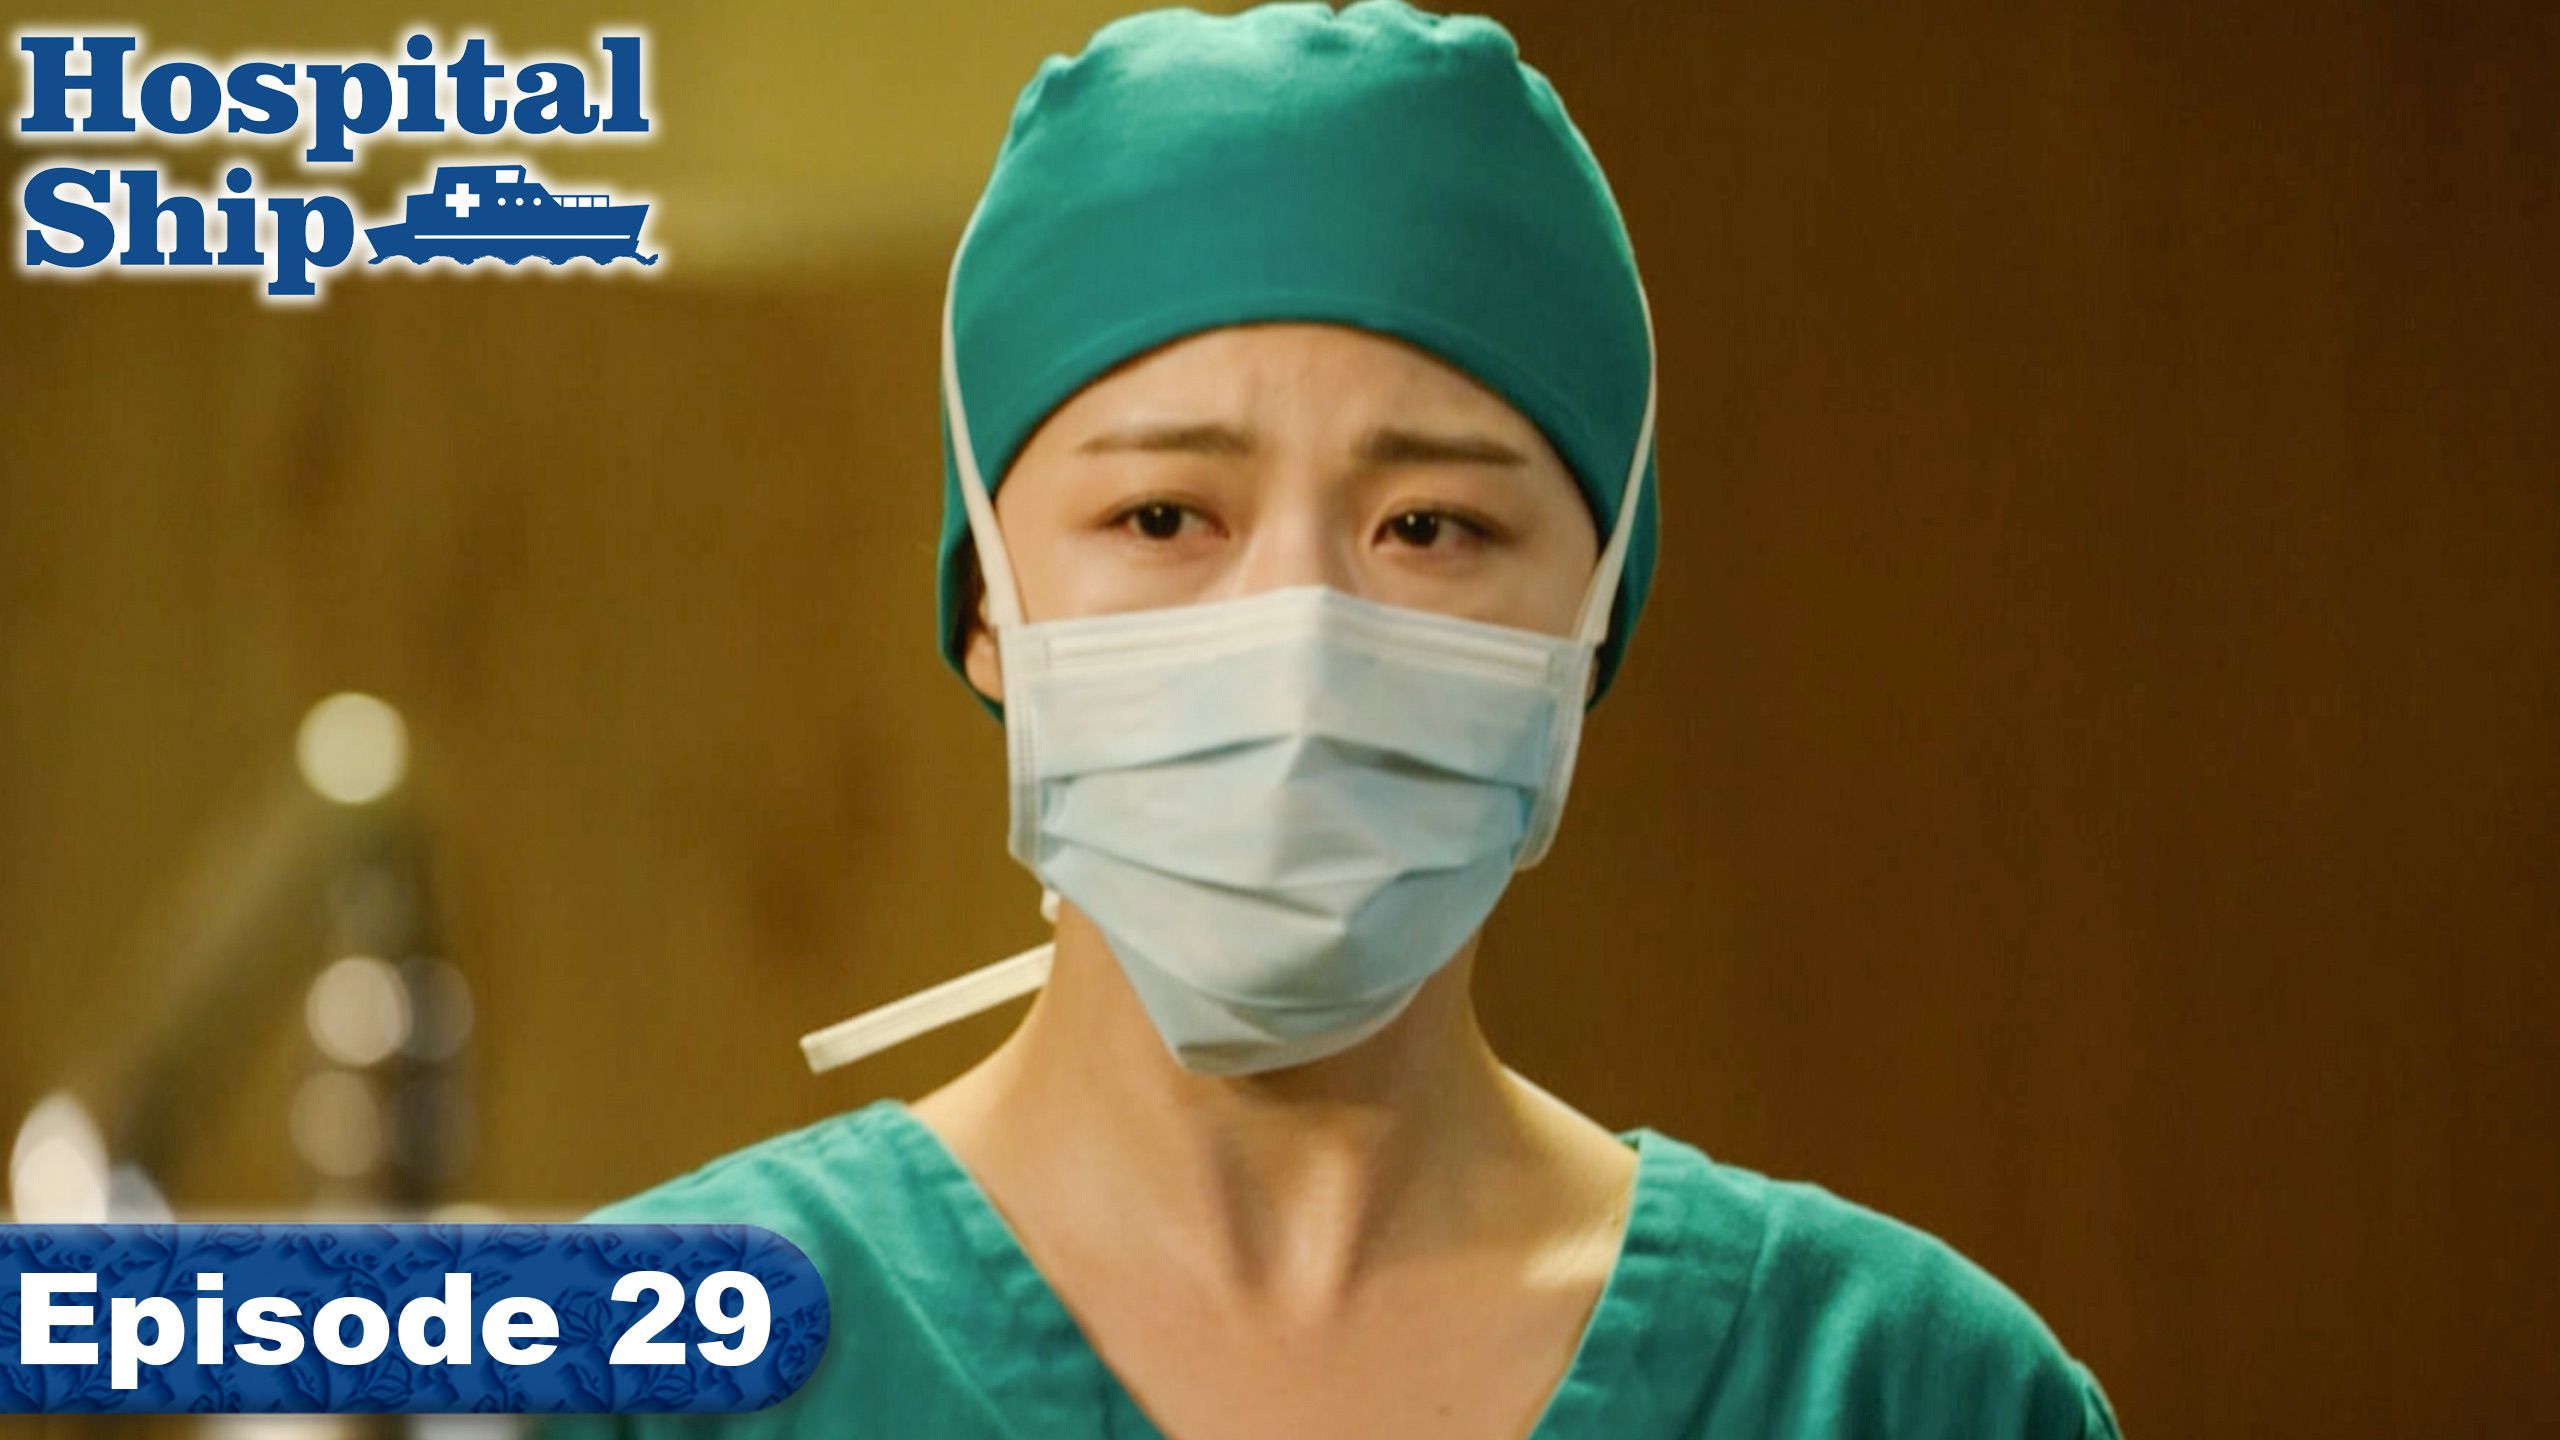 Episode 29 - Hospital Ship